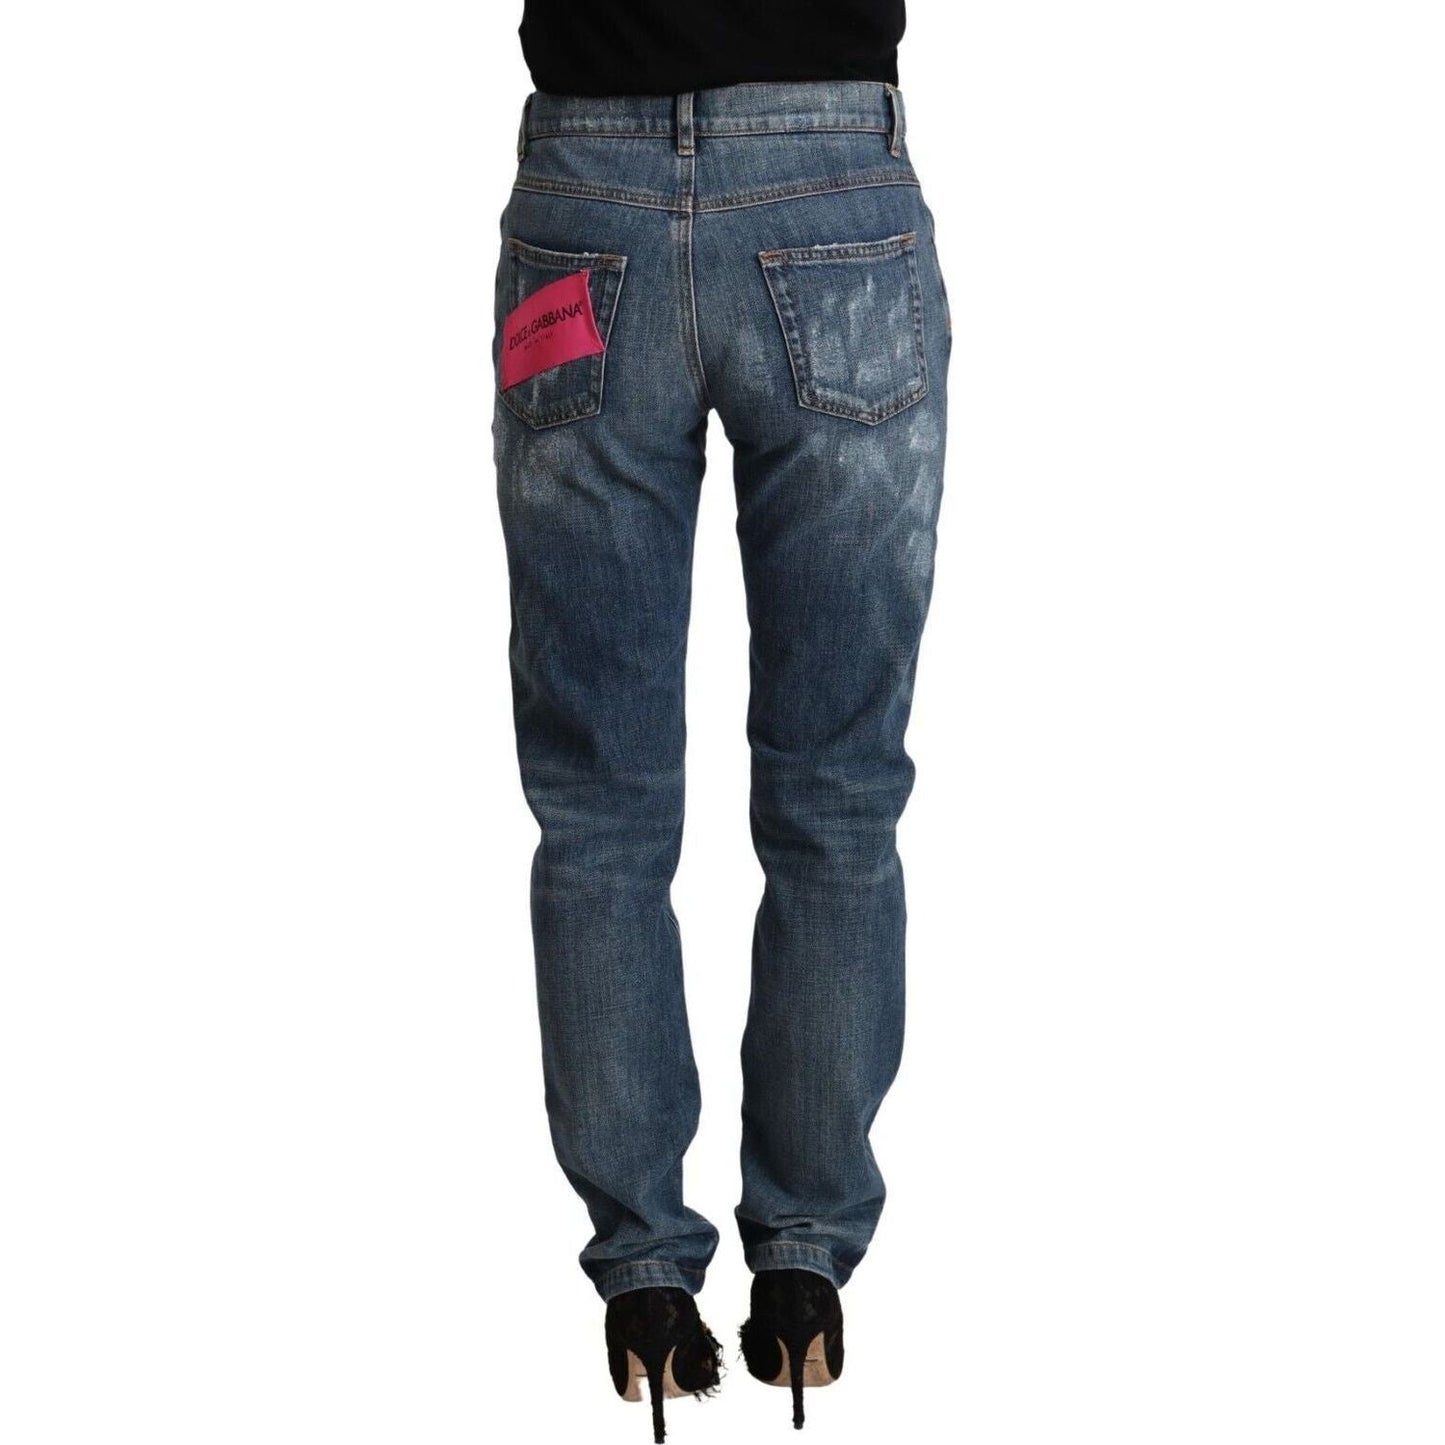 Dolce & Gabbana Elegant Skinny Denim Jeans for the Modern Woman blue-distressed-denim-boyfriend-skinny-jeans